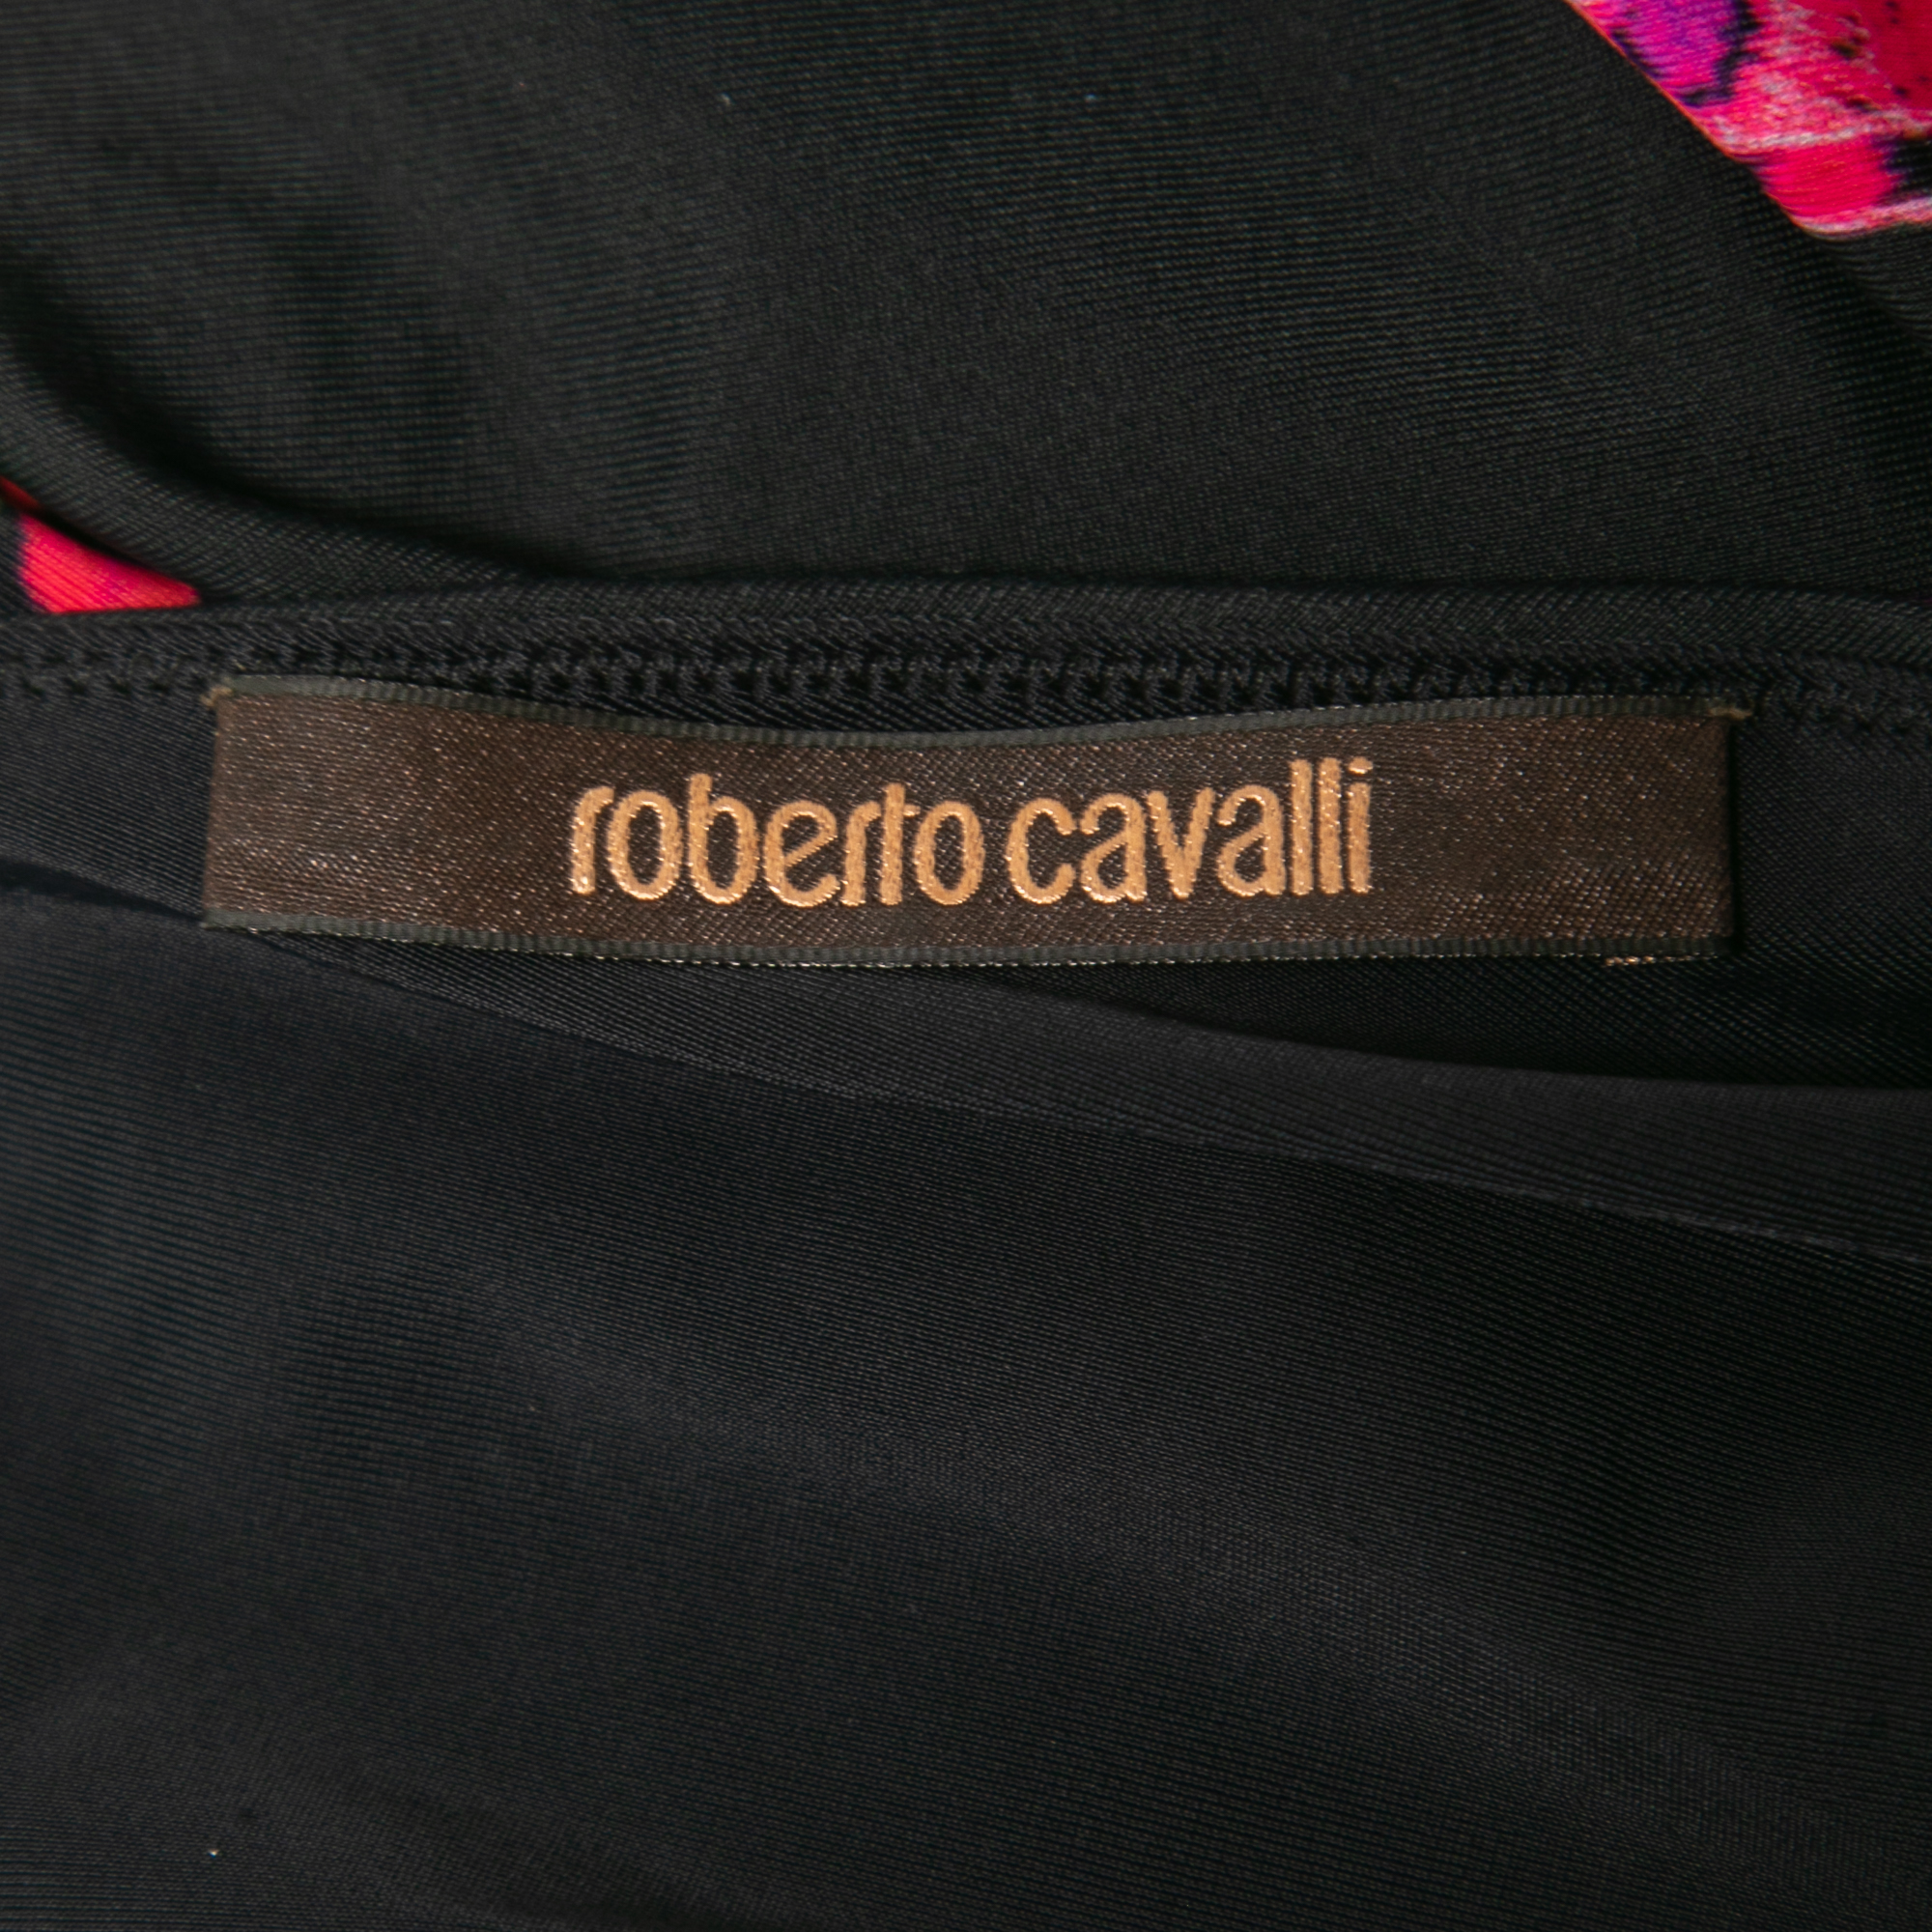 Roberto Cavalli Black Floral Printed Jersey V-Neck Top S